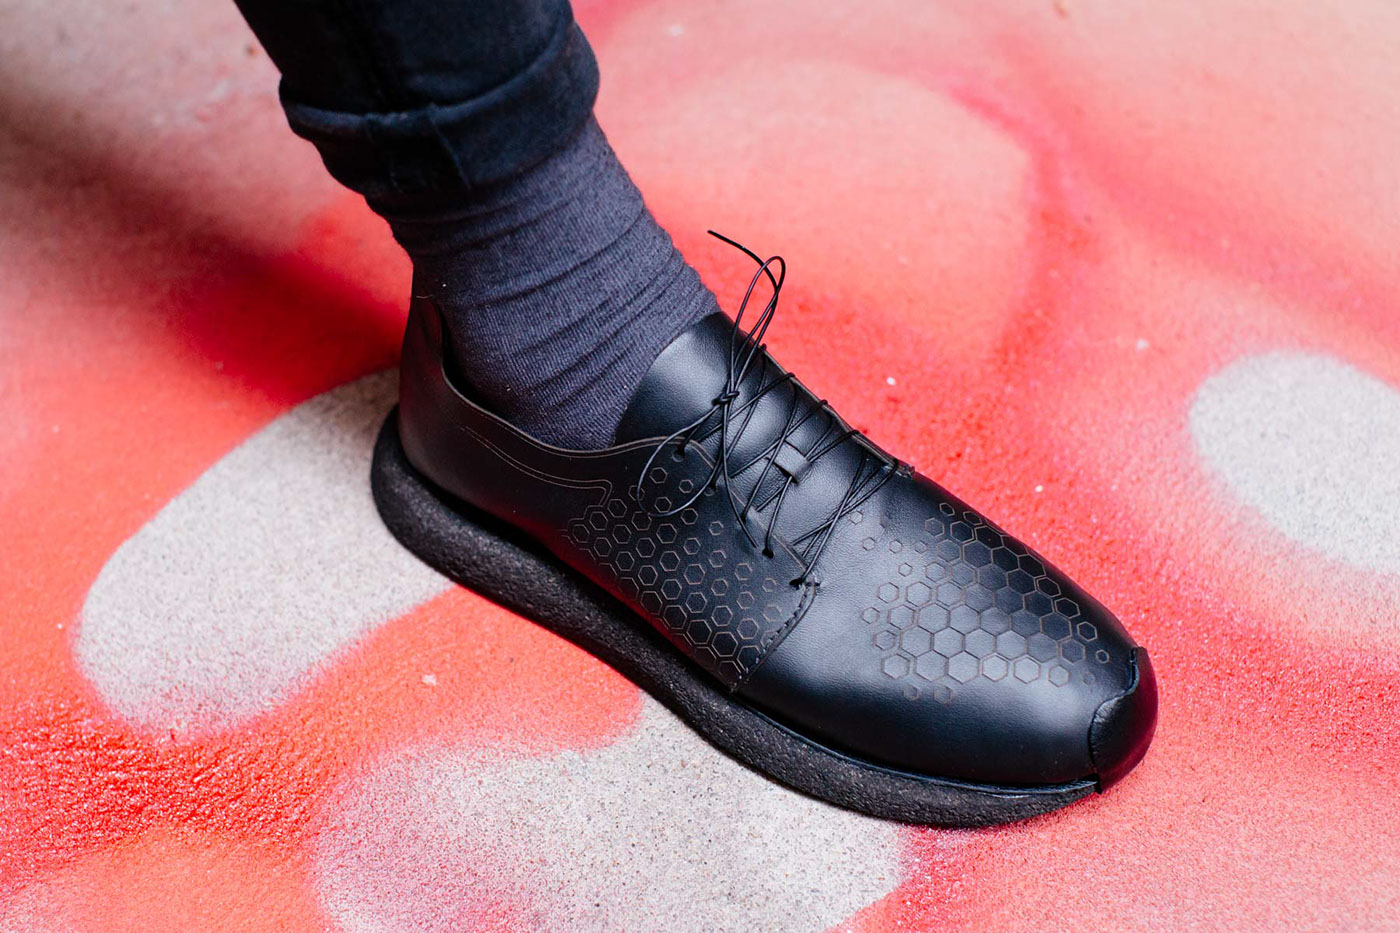 Lasercut Laser-Cut laser-etched shoe sneaker shoemaking leather